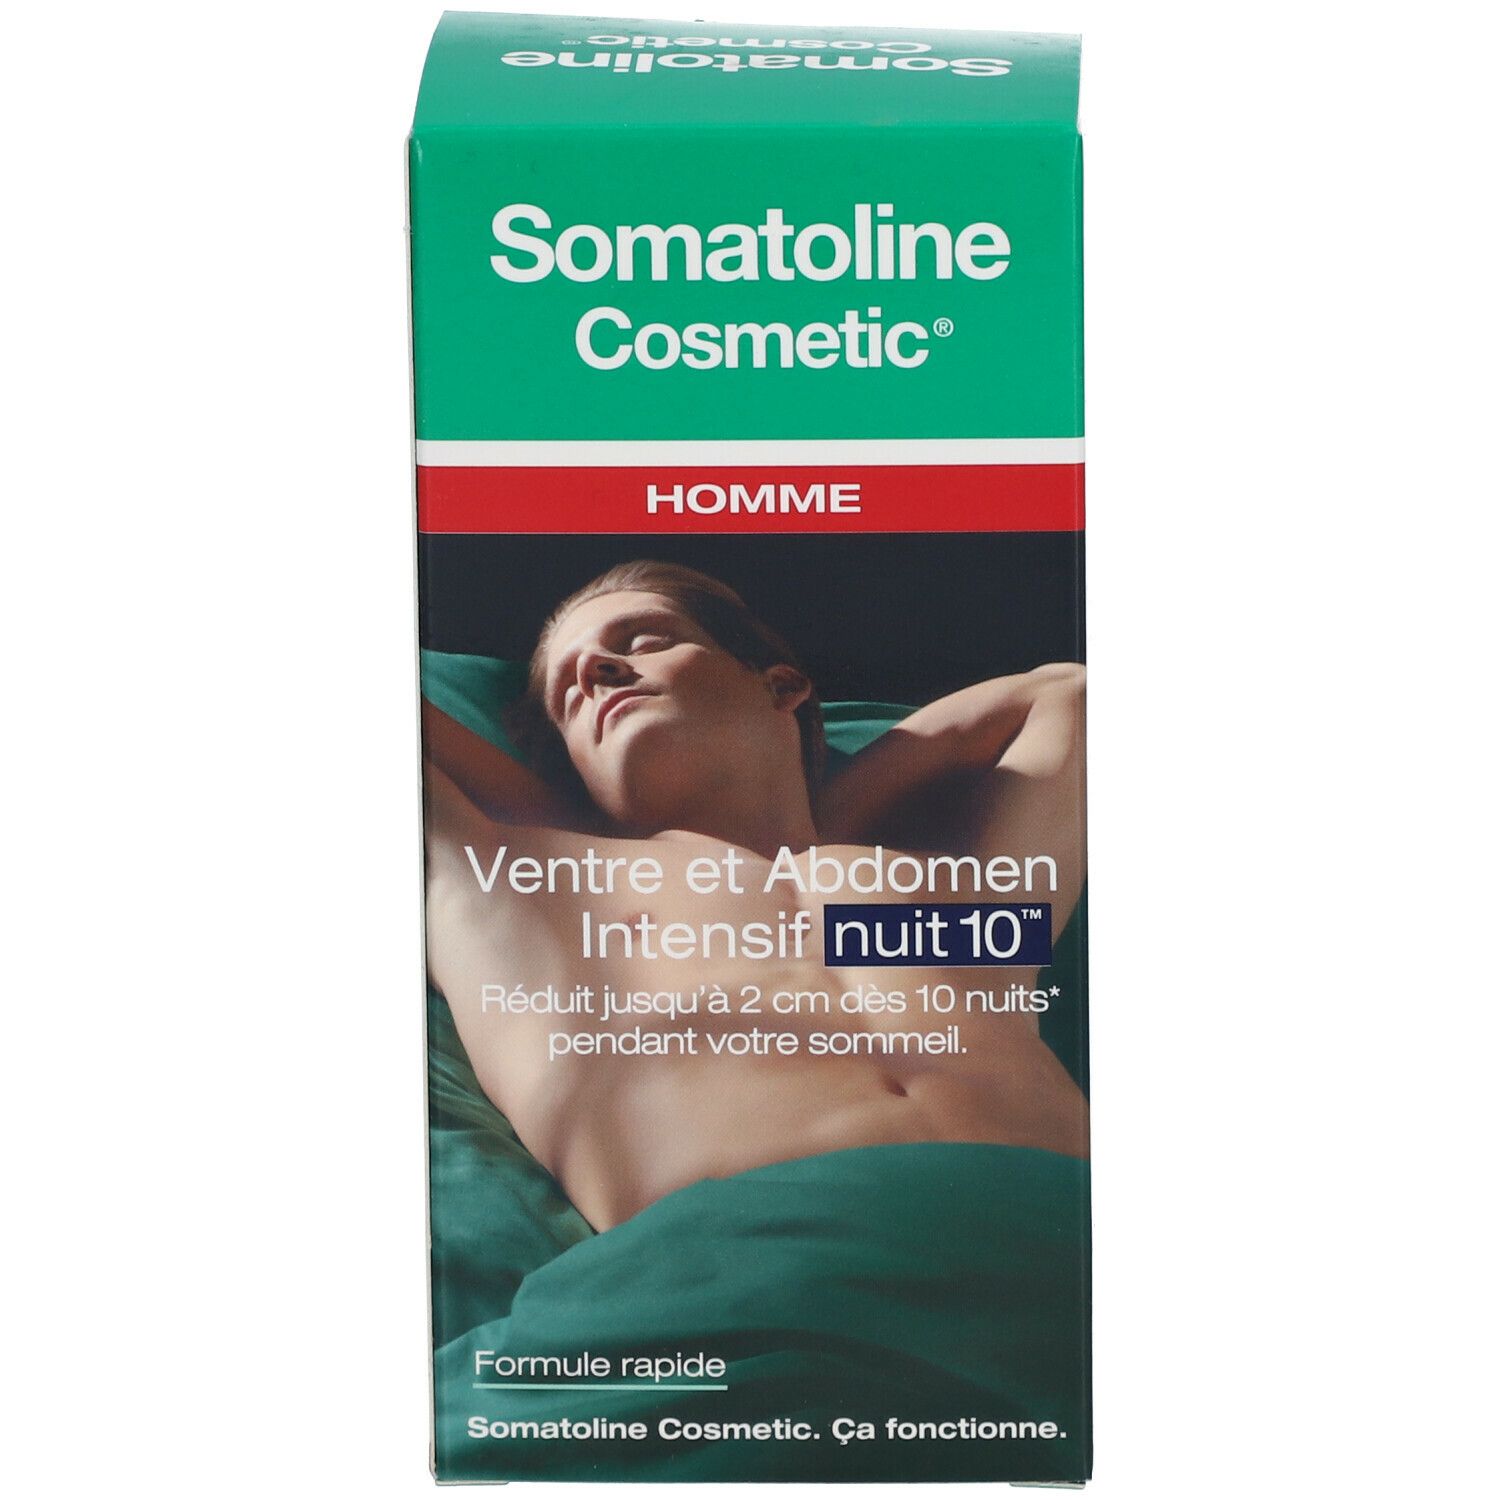 Somatoline Cosmetic® Homme traitement intensif nuit ventre et abdomen